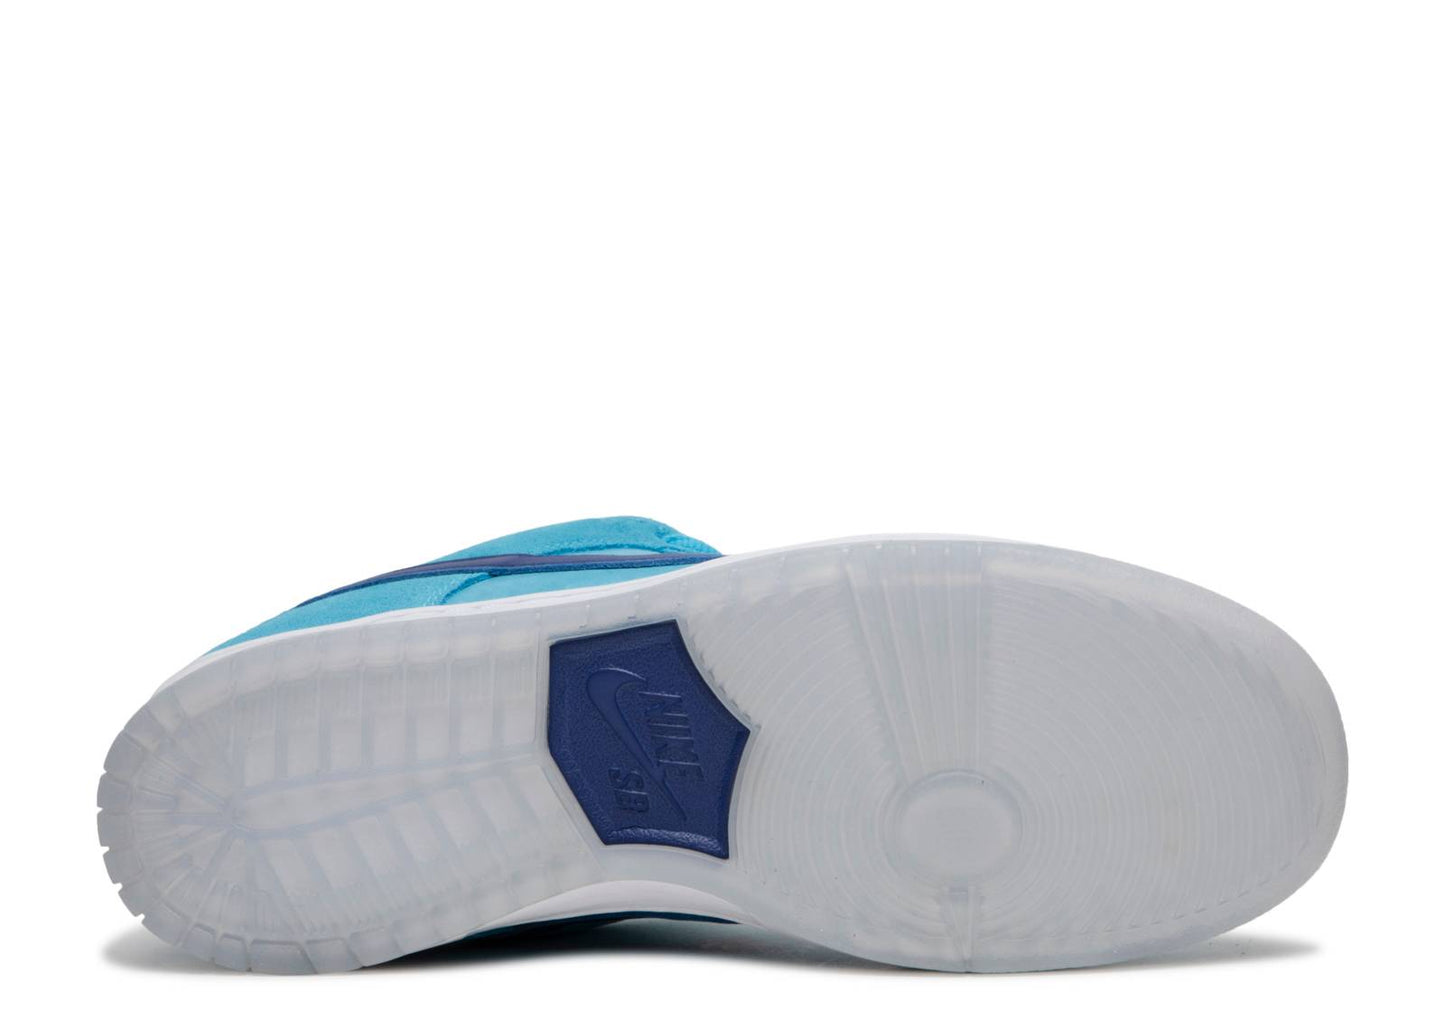 Nike SB Dunk Low Pro "Blue Fury"